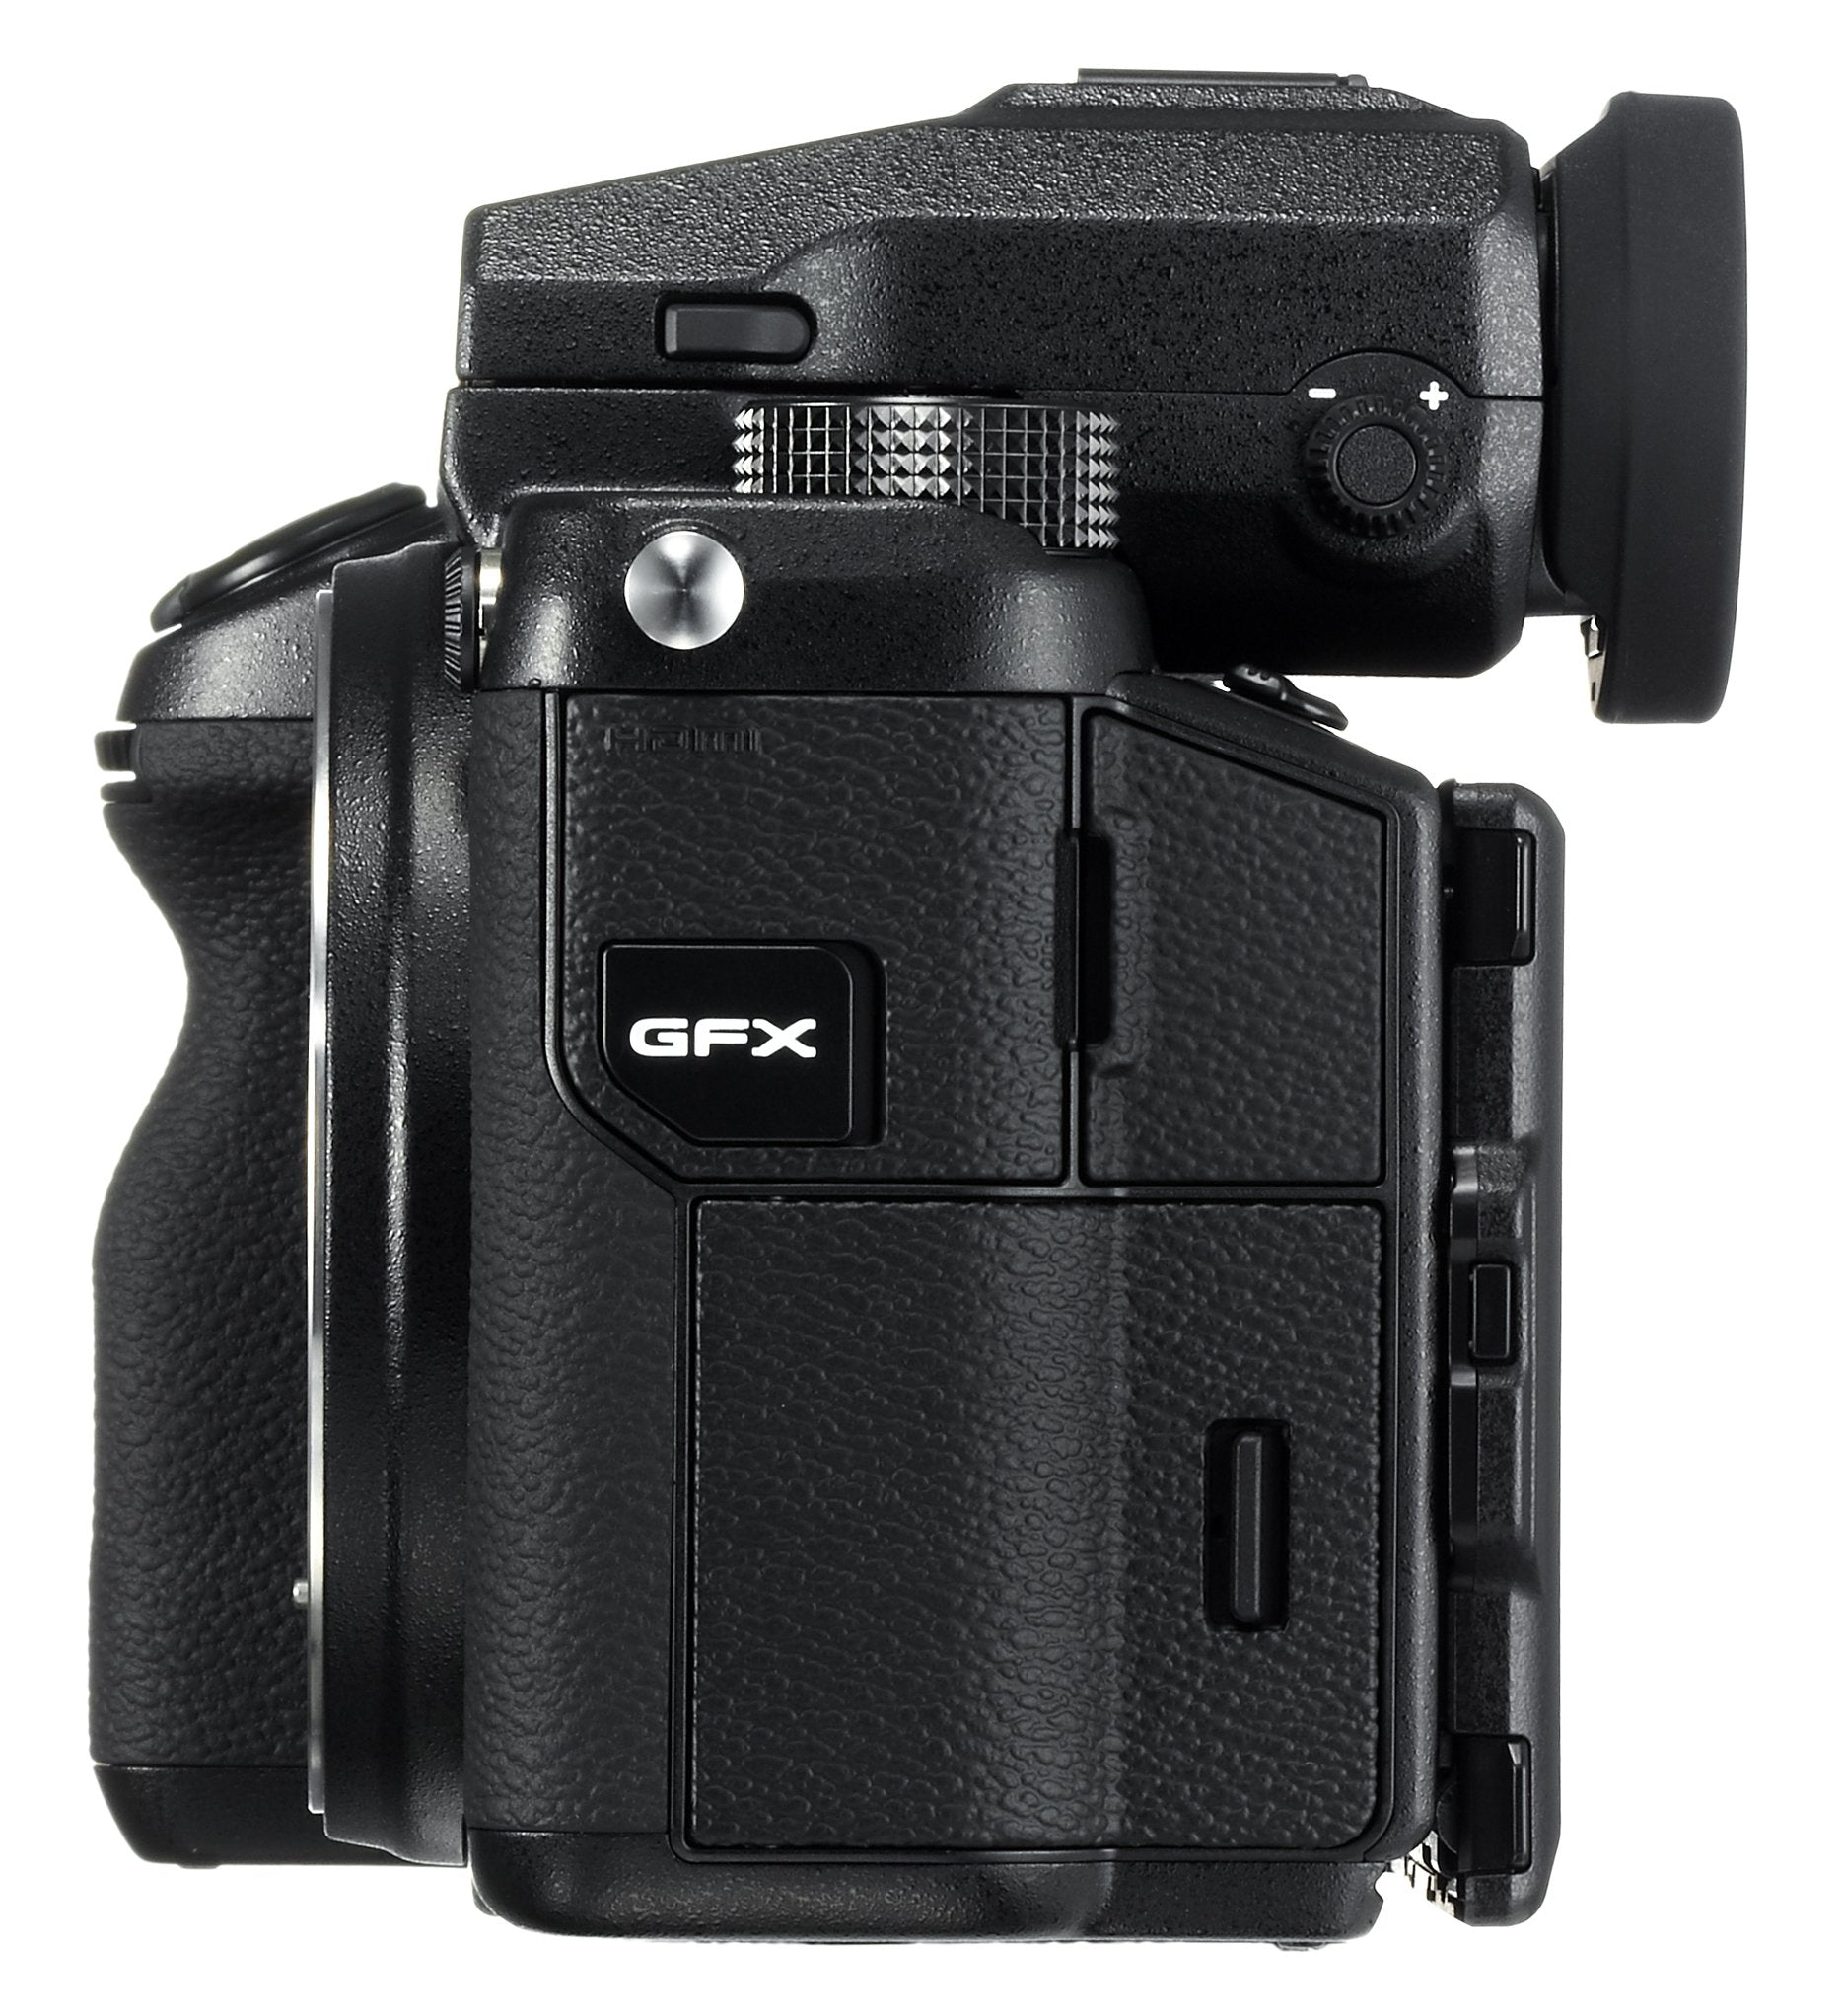 Fujifilm GFX 50S cameras